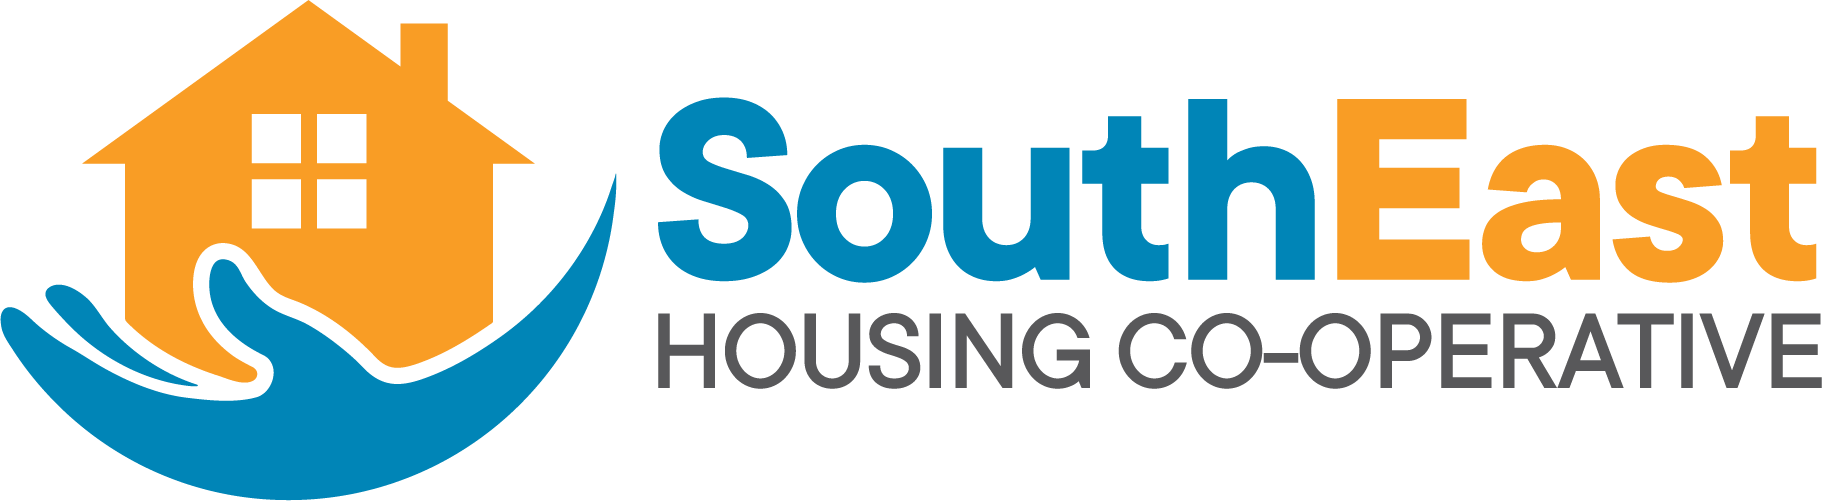 SouthEast Housing Co-operative